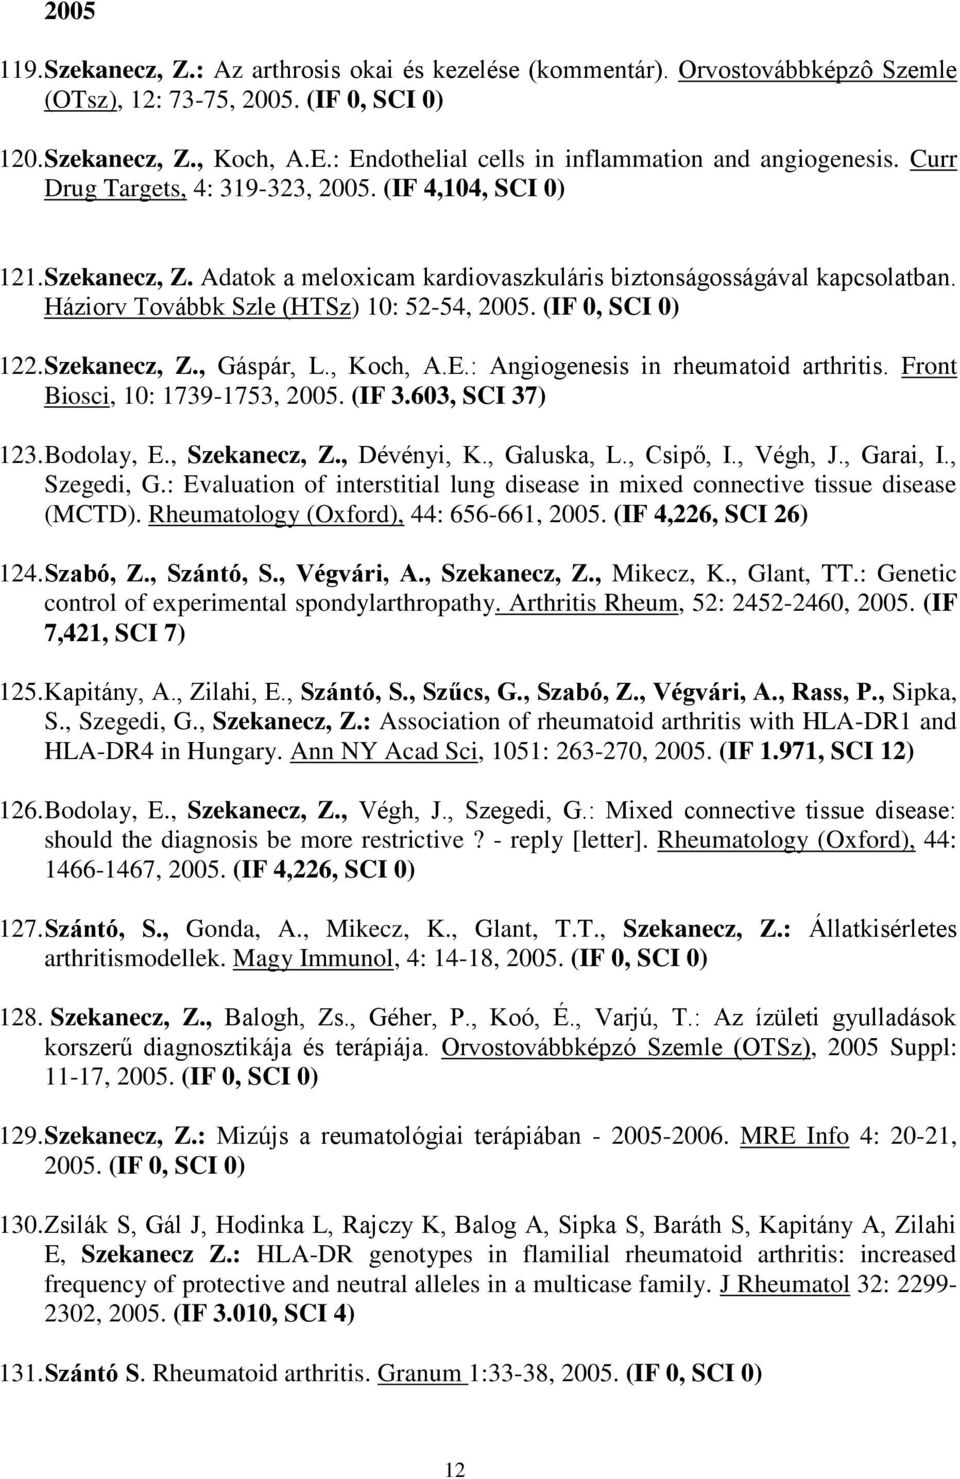 Háziorv Továbbk Szle (HTSz) 10: 52-54, 2005. (IF 0, SCI 0) 122. Szekanecz, Z., Gáspár, L., Koch, A.E.: Angiogenesis in rheumatoid arthritis. Front Biosci, 10: 1739-1753, 2005. (IF 3.603, SCI 37) 123.